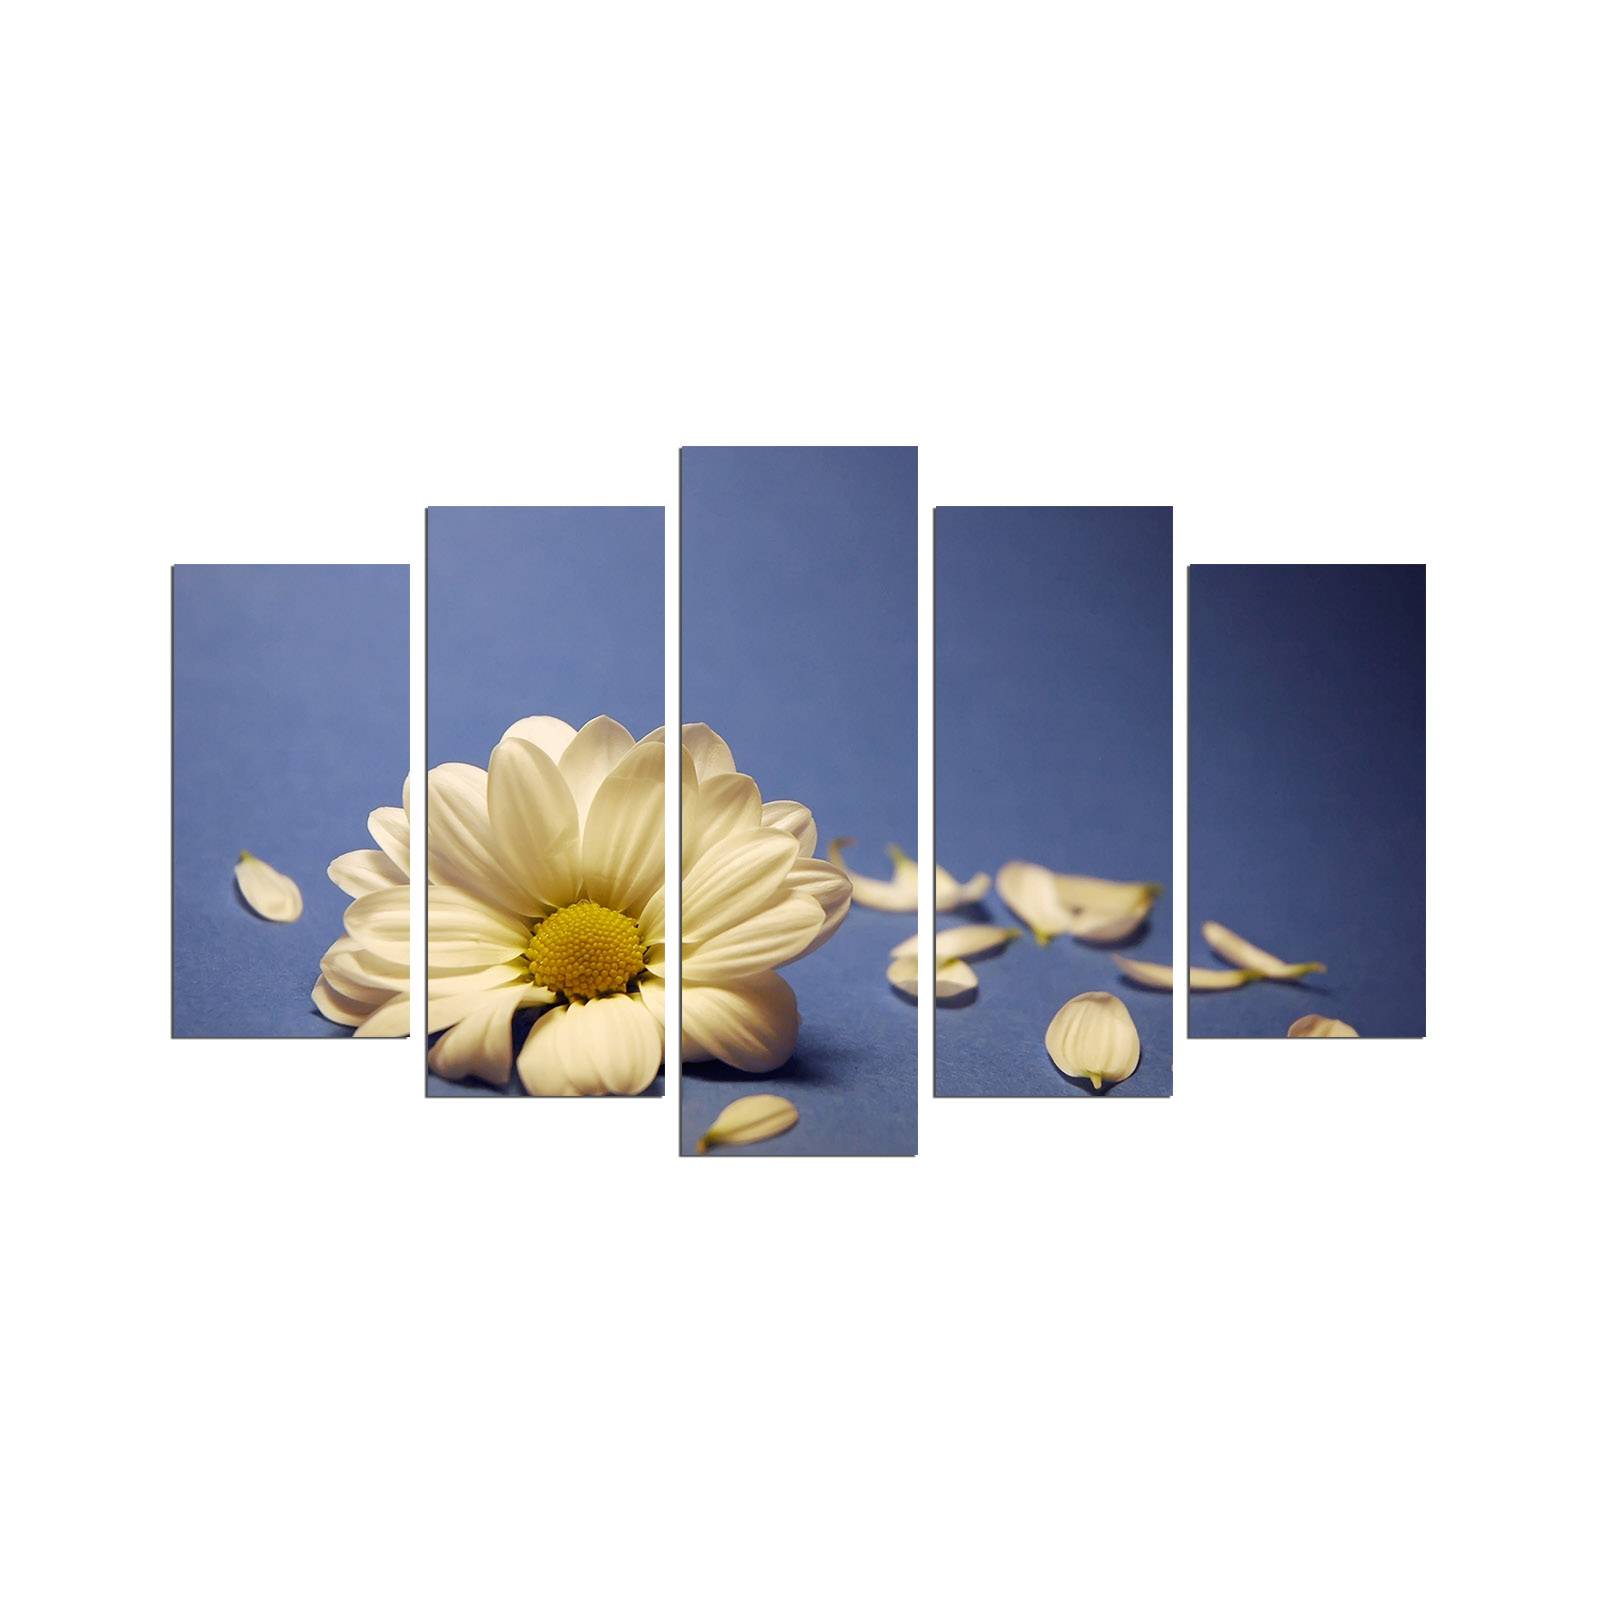 Pentittico Atos White Daisy Flower e motivo di sfondo blu